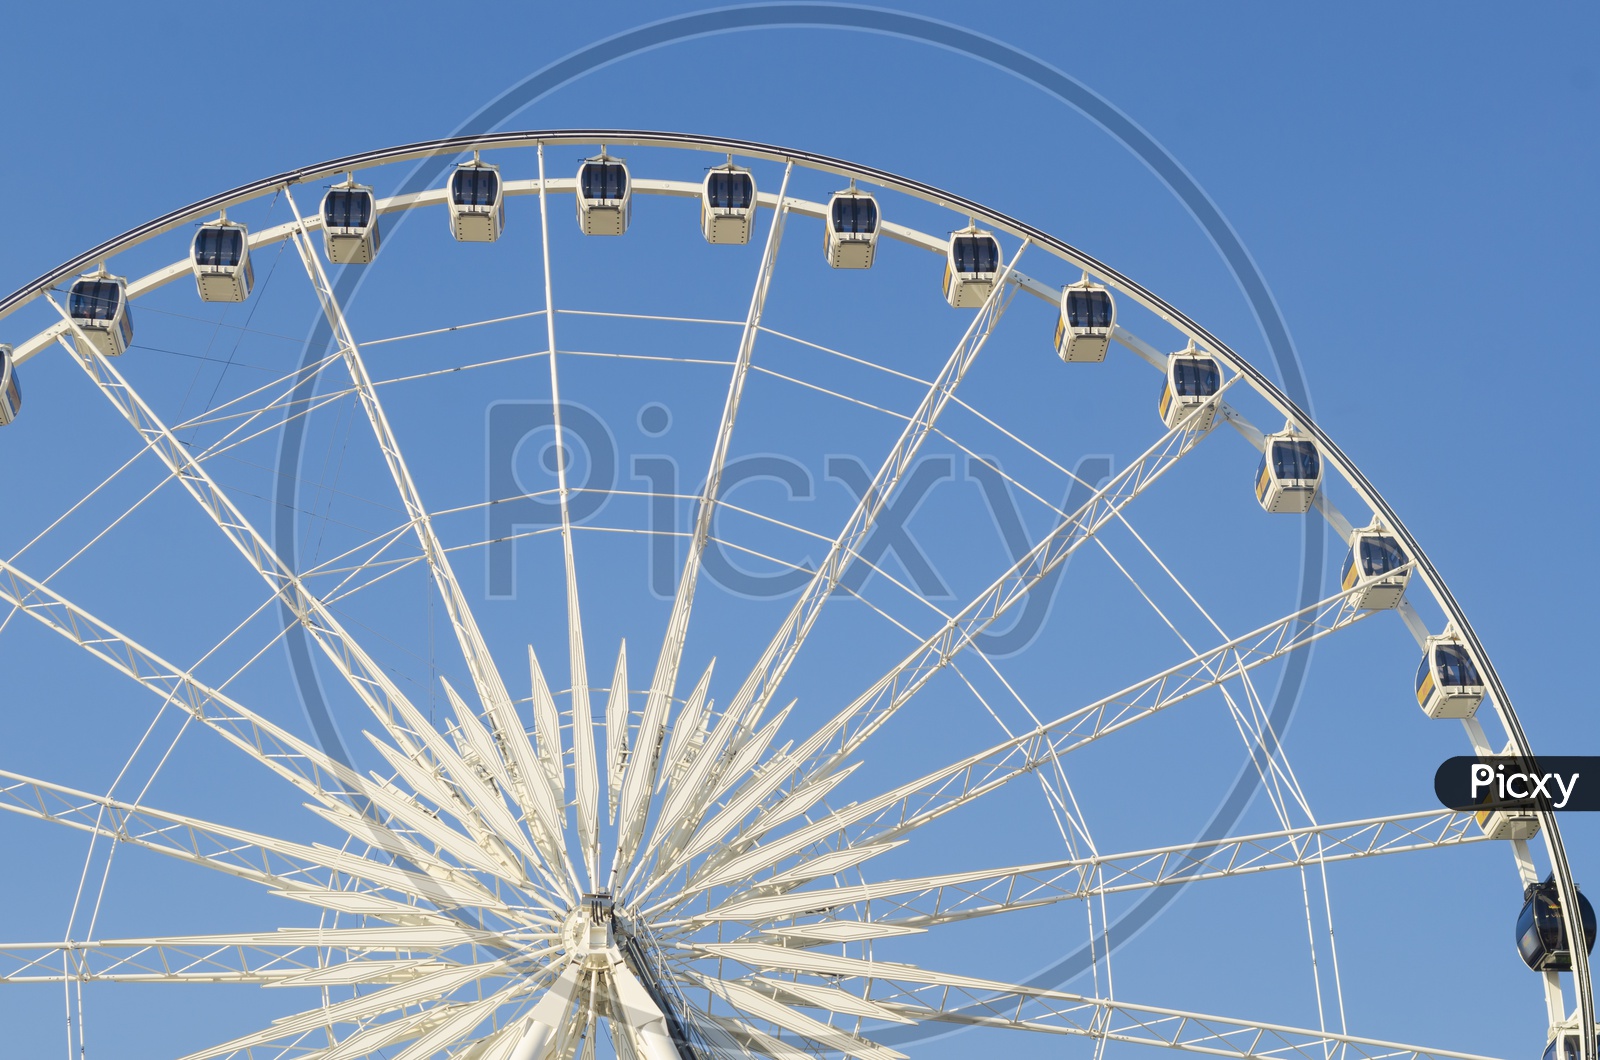 Large Ferris wheel